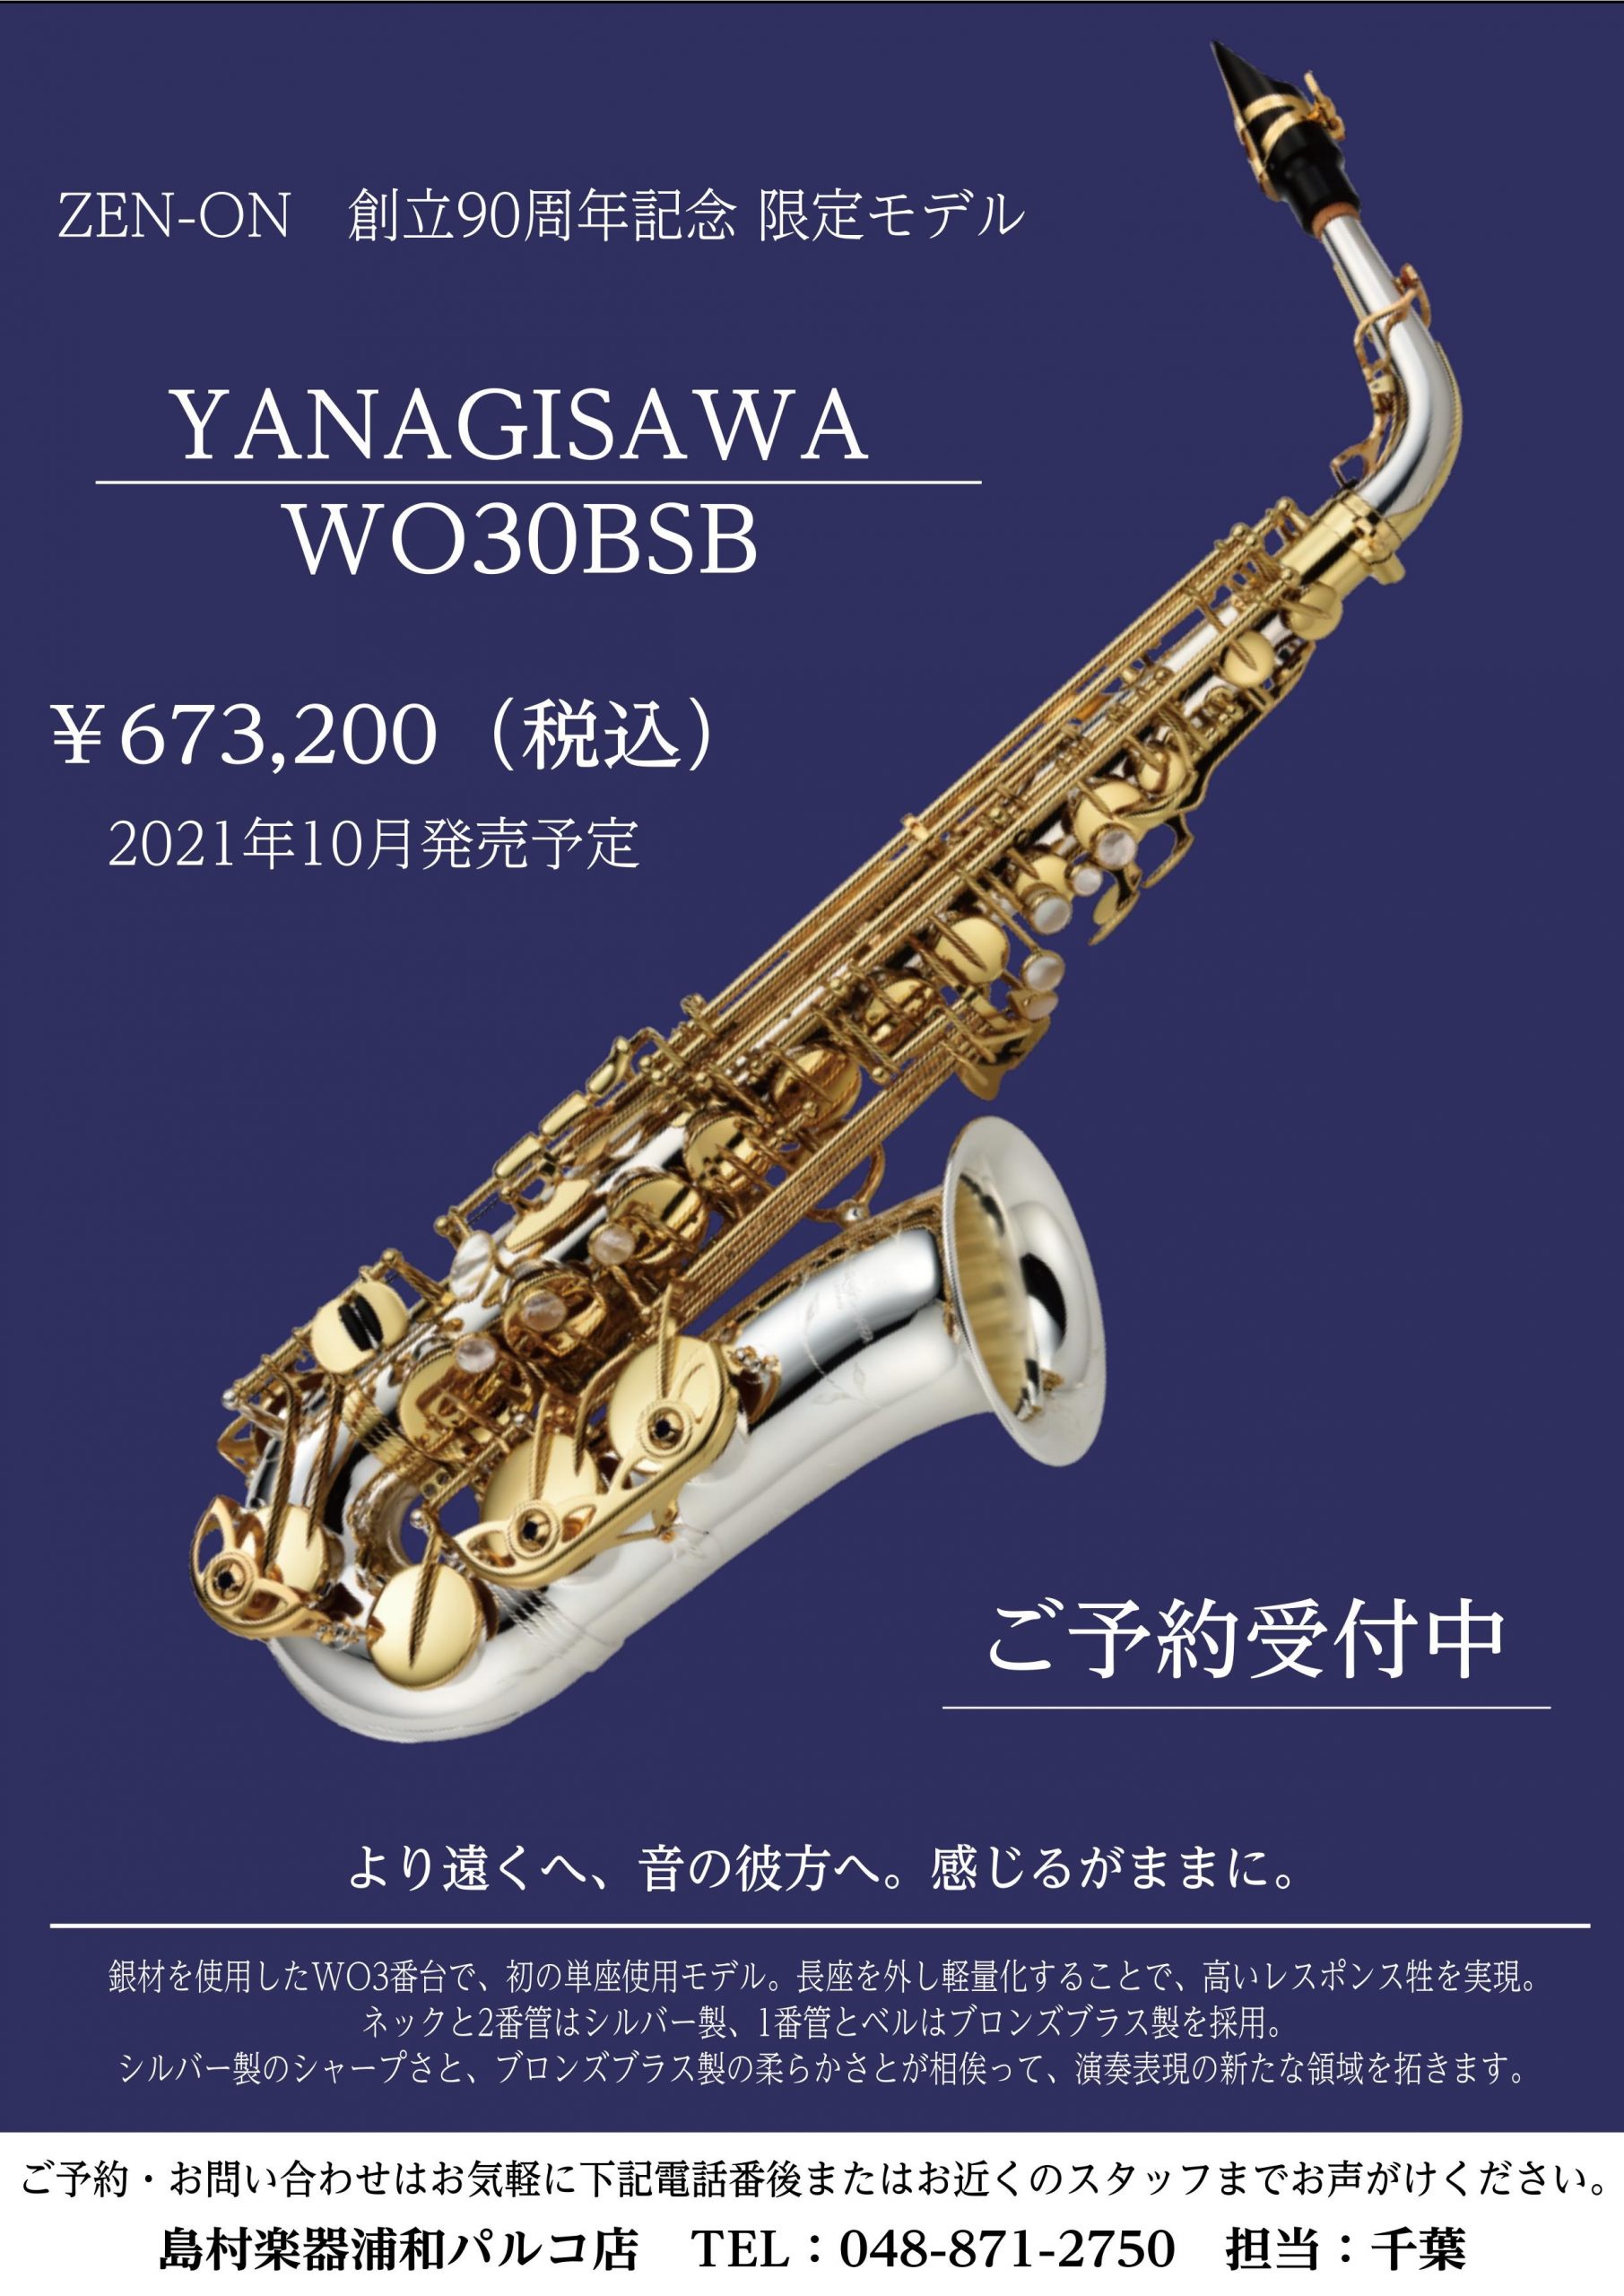 【新製品】『Yanagisawa A-WO30BSB』ZEN-ON創立90周年記念限定モデル発売！【予約受付中】